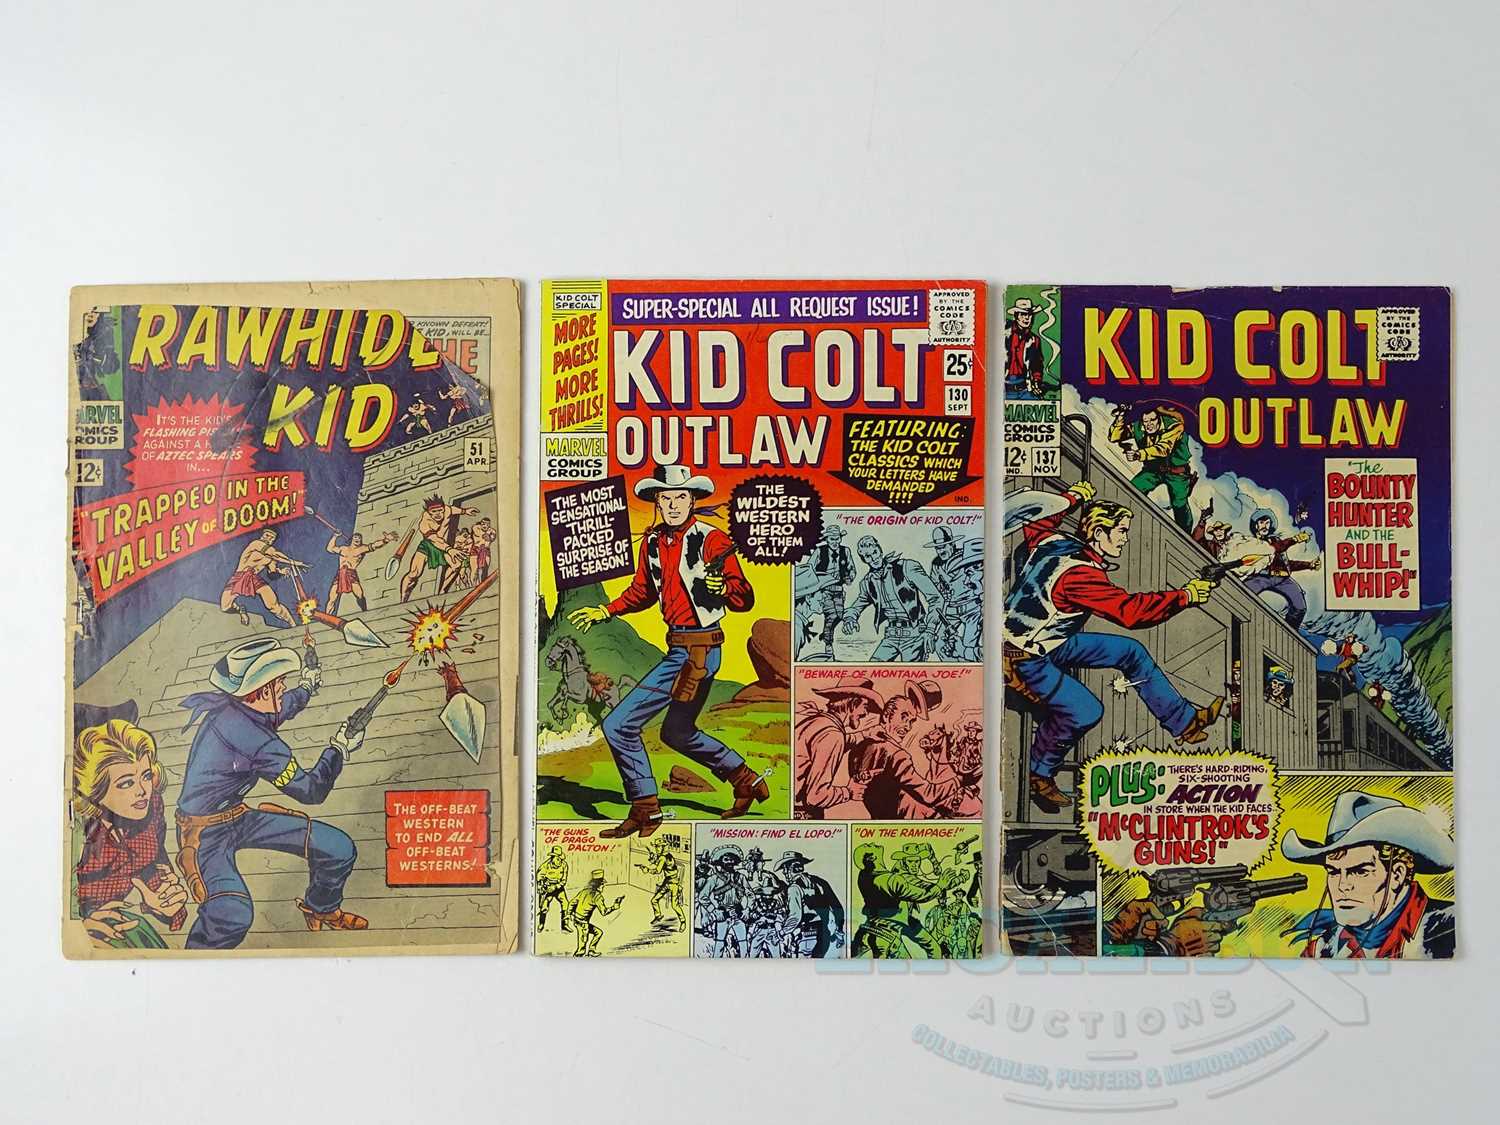 RAWHIDE KID #51 & KID COLT OUTLAW #130, 137 (3 in Lot) - (1966/67 - MARVEL) Includes origin of Kid